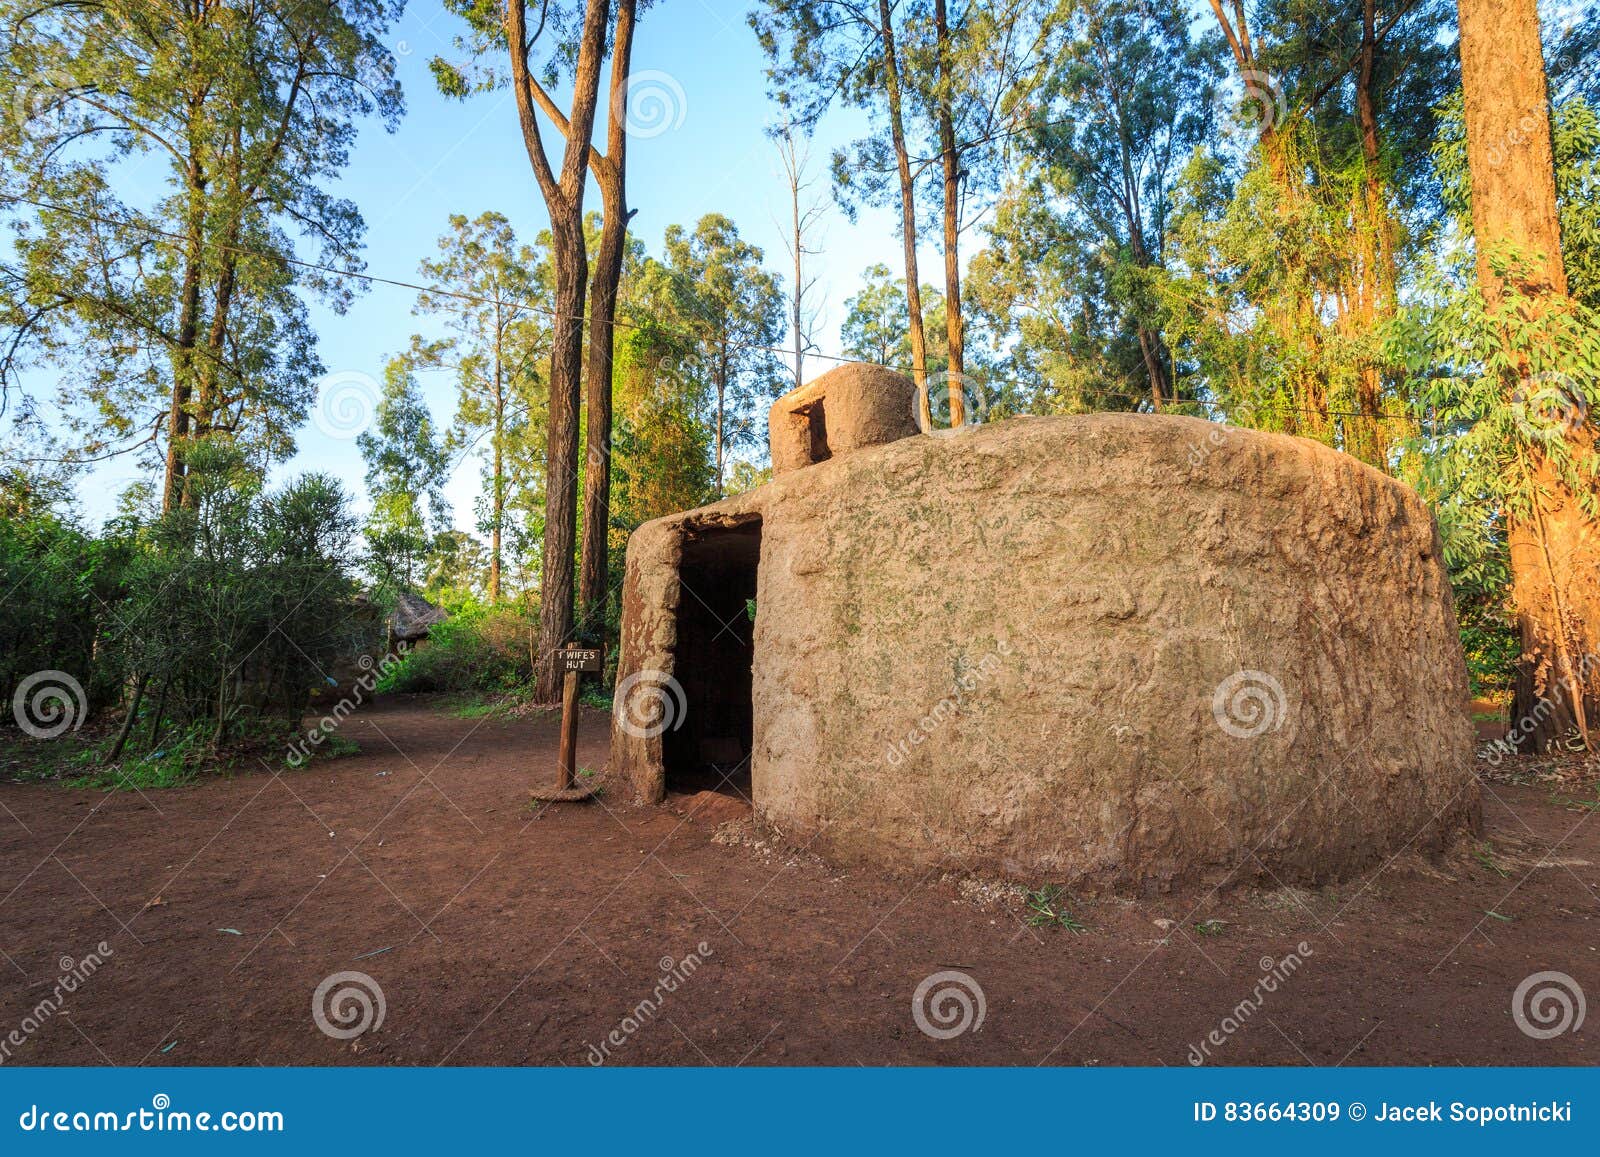 Traditional, Tribal Village of Kenyan People Stock Image - Image of ...